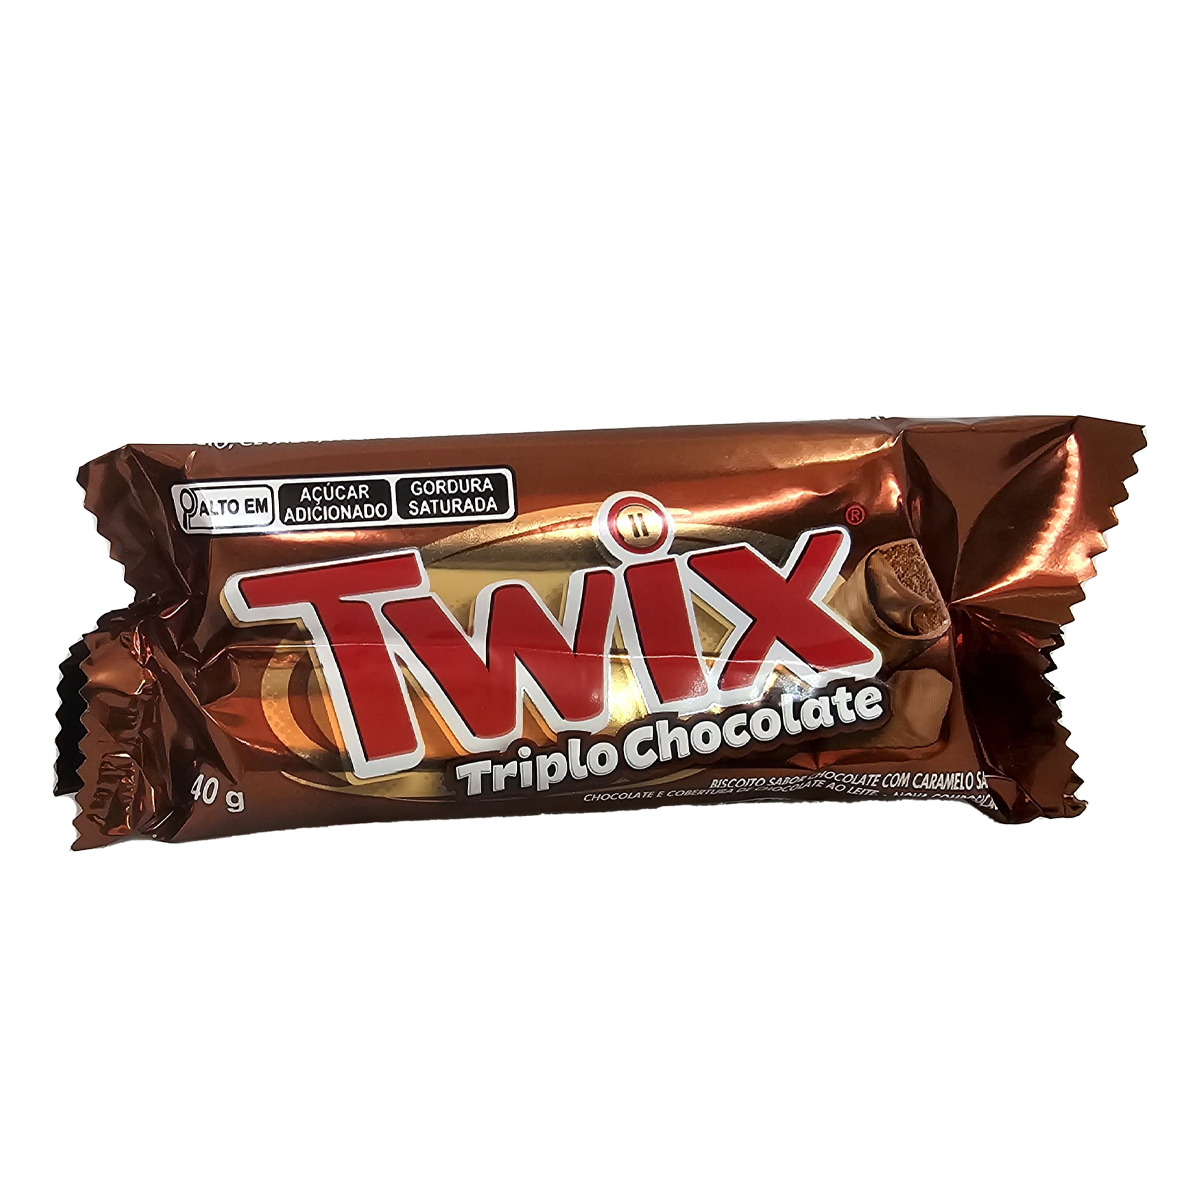 18er Pack Twix Triplo Chocolate 40g